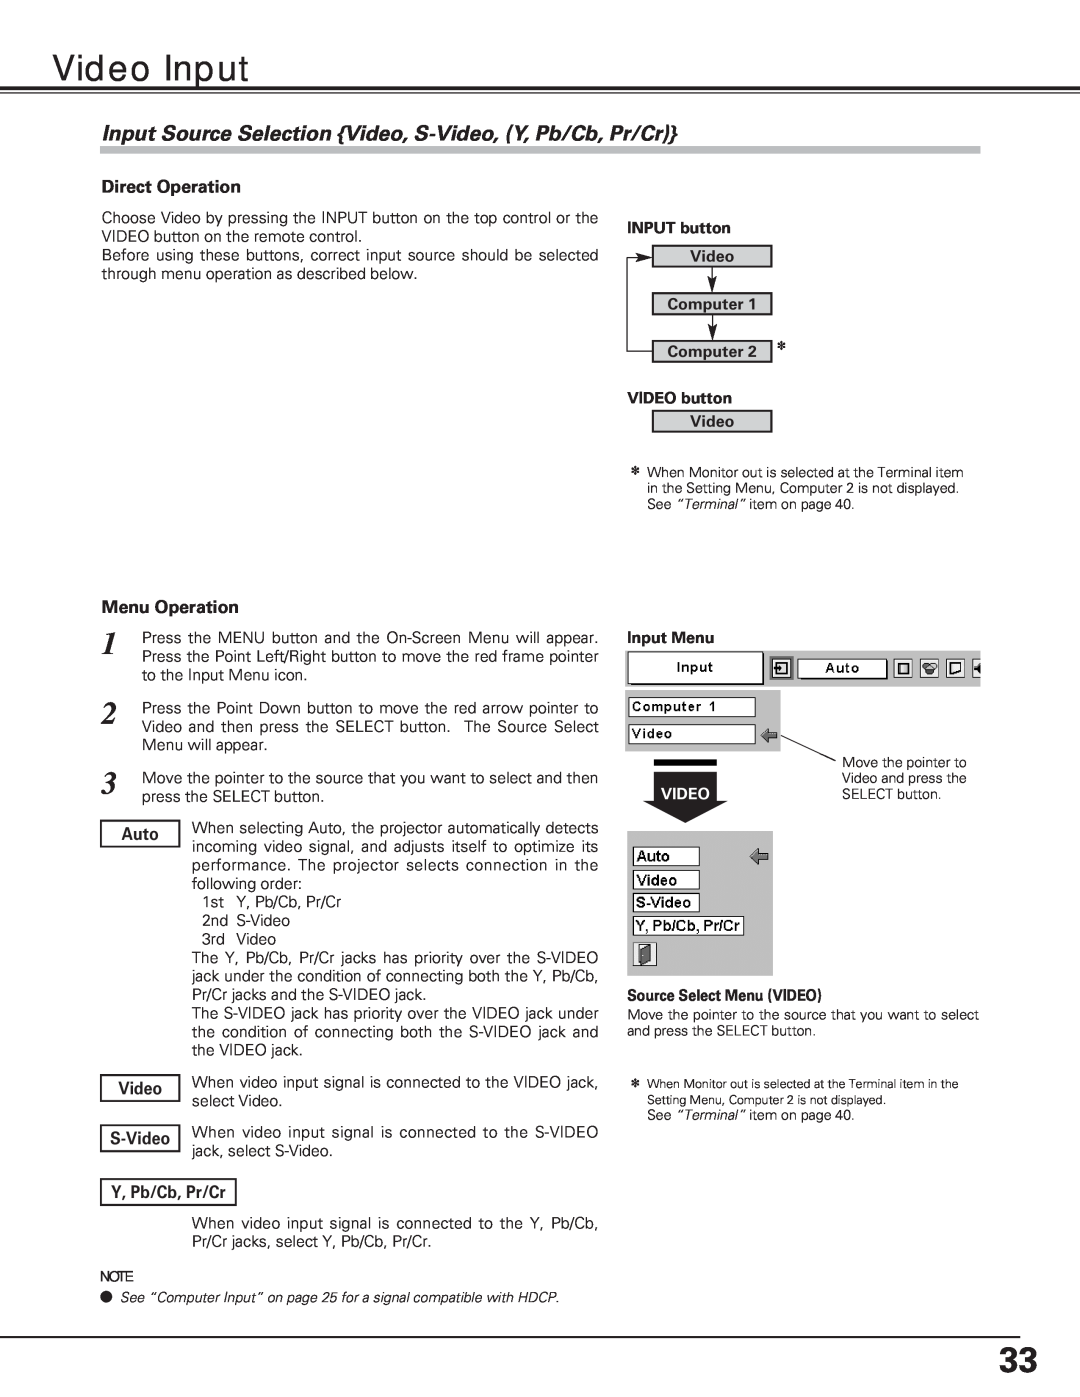 Eiki LC-XE10 instruction manual Video Input, INPUT button Video Computer Computer, VIDEO button Video, S-Video, Input Menu 